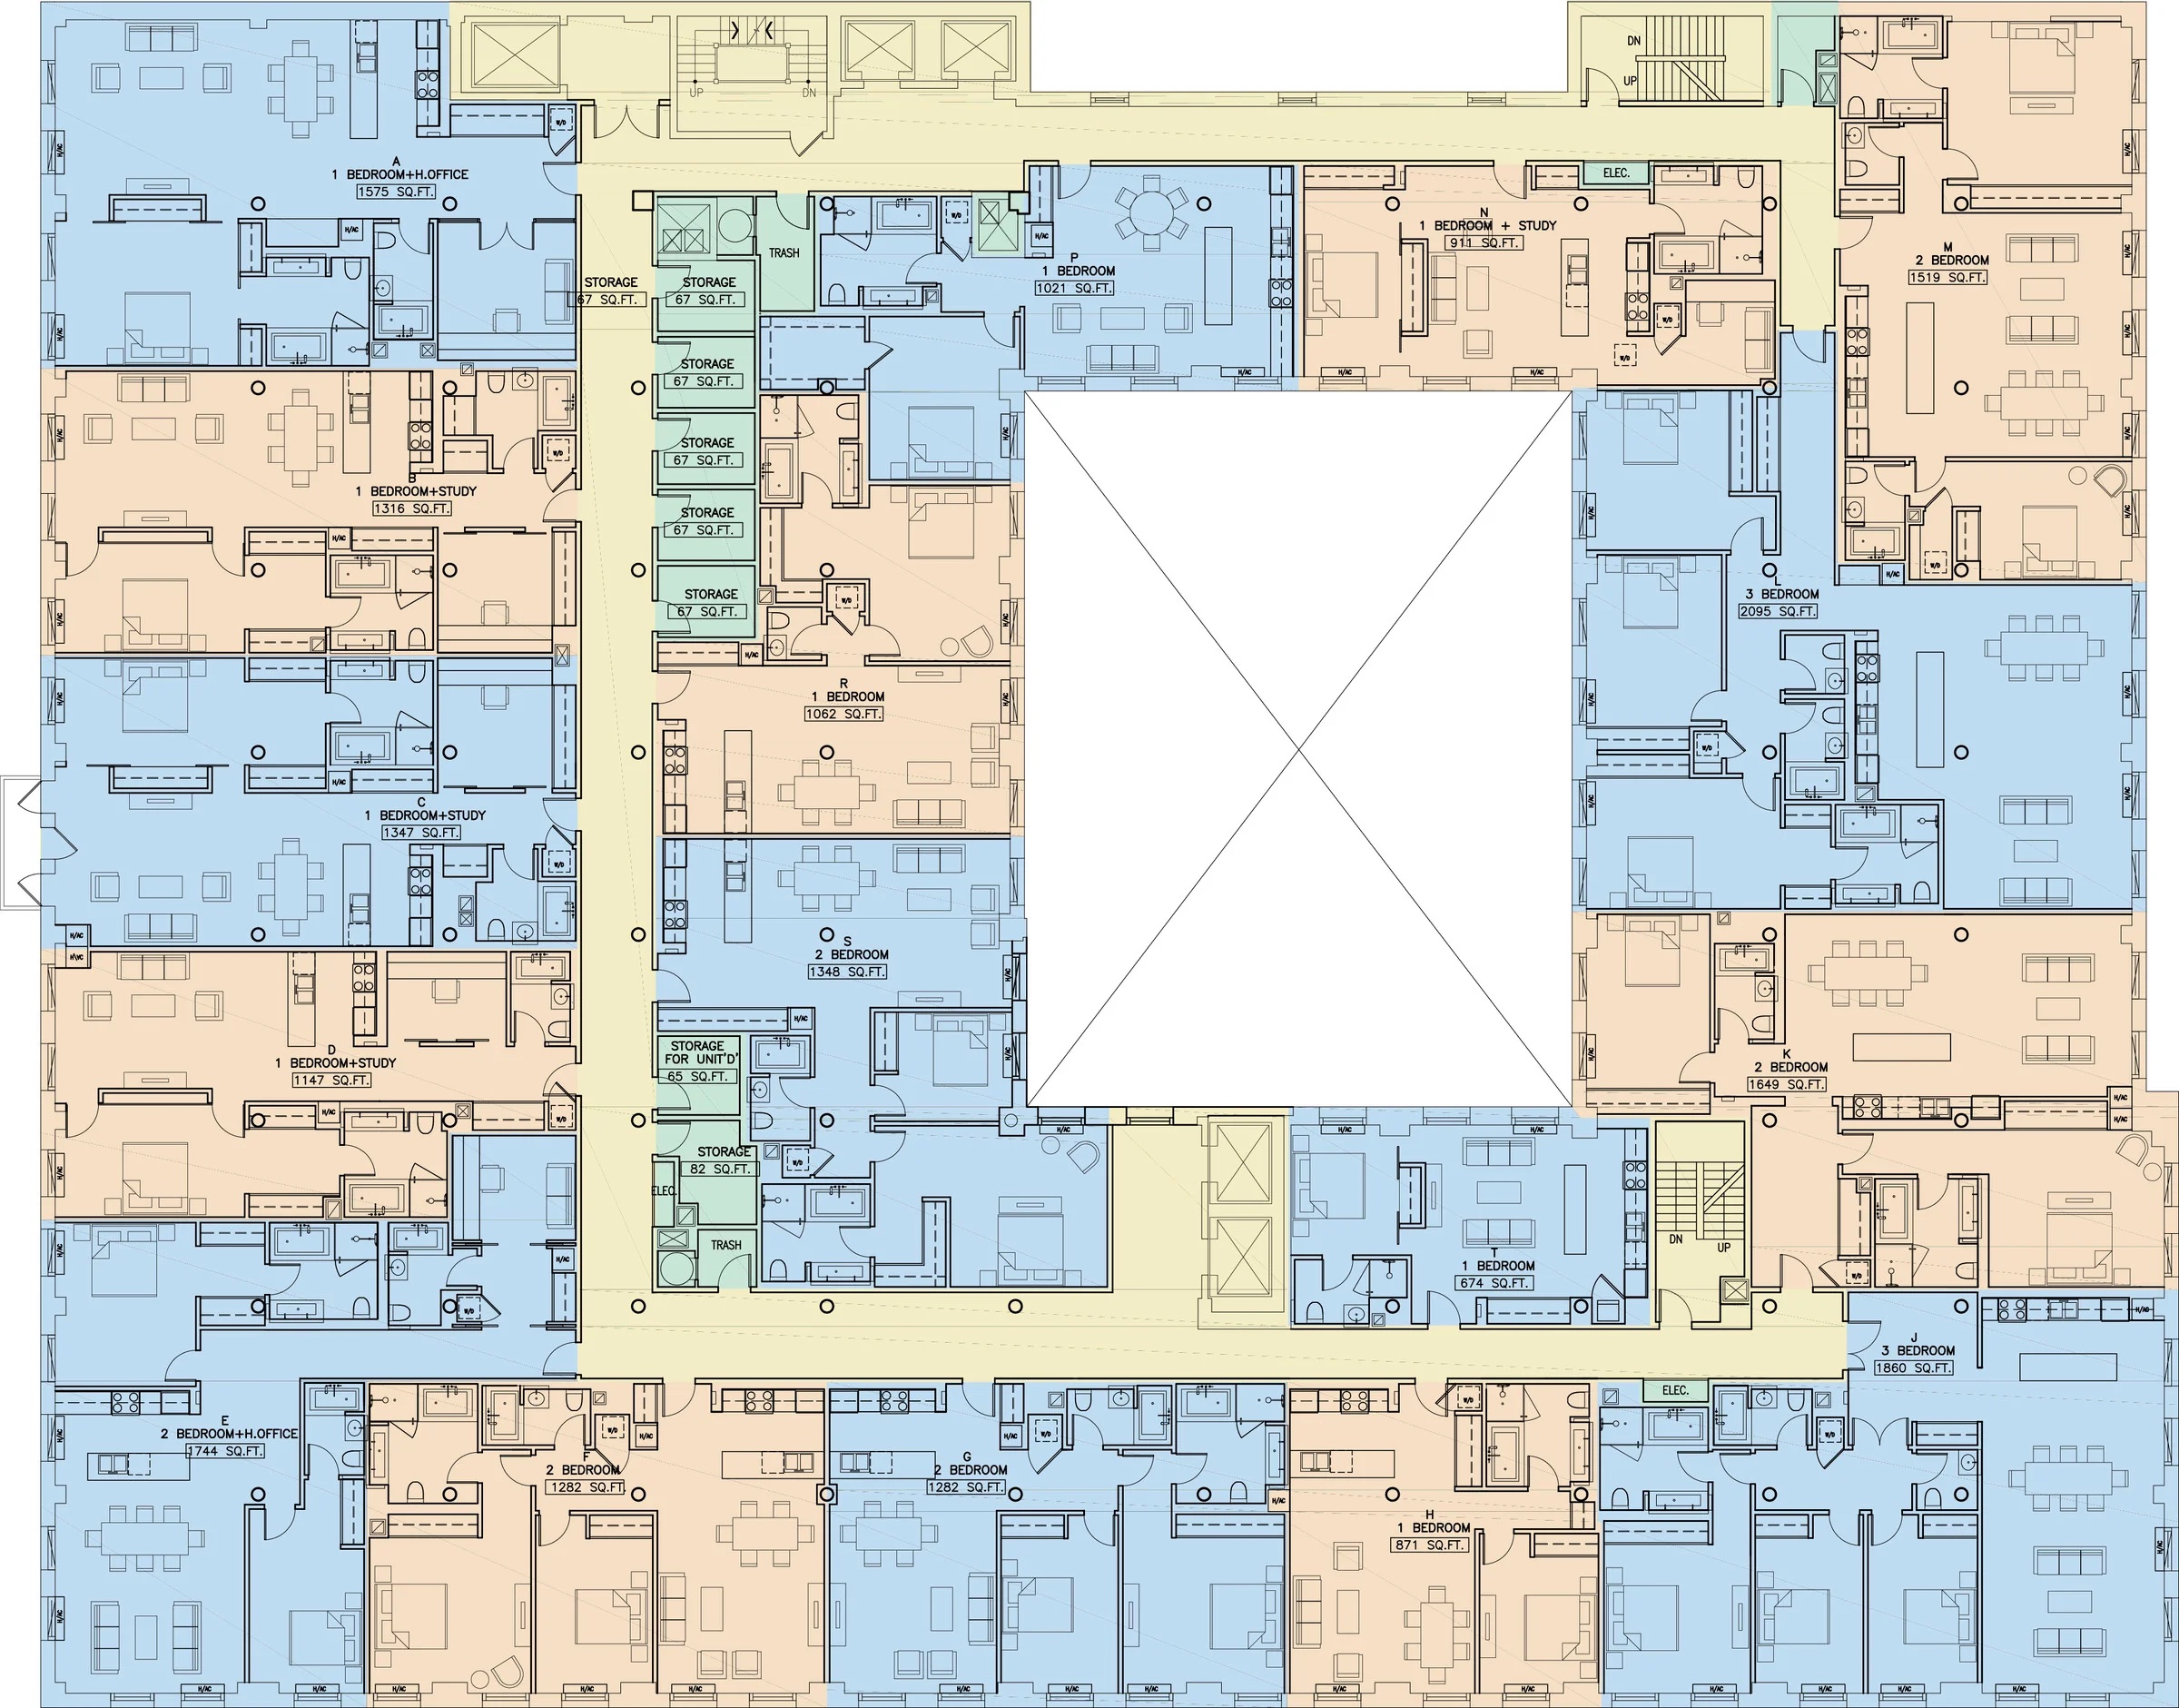 Grand Madison condo floor plan layout, New York 